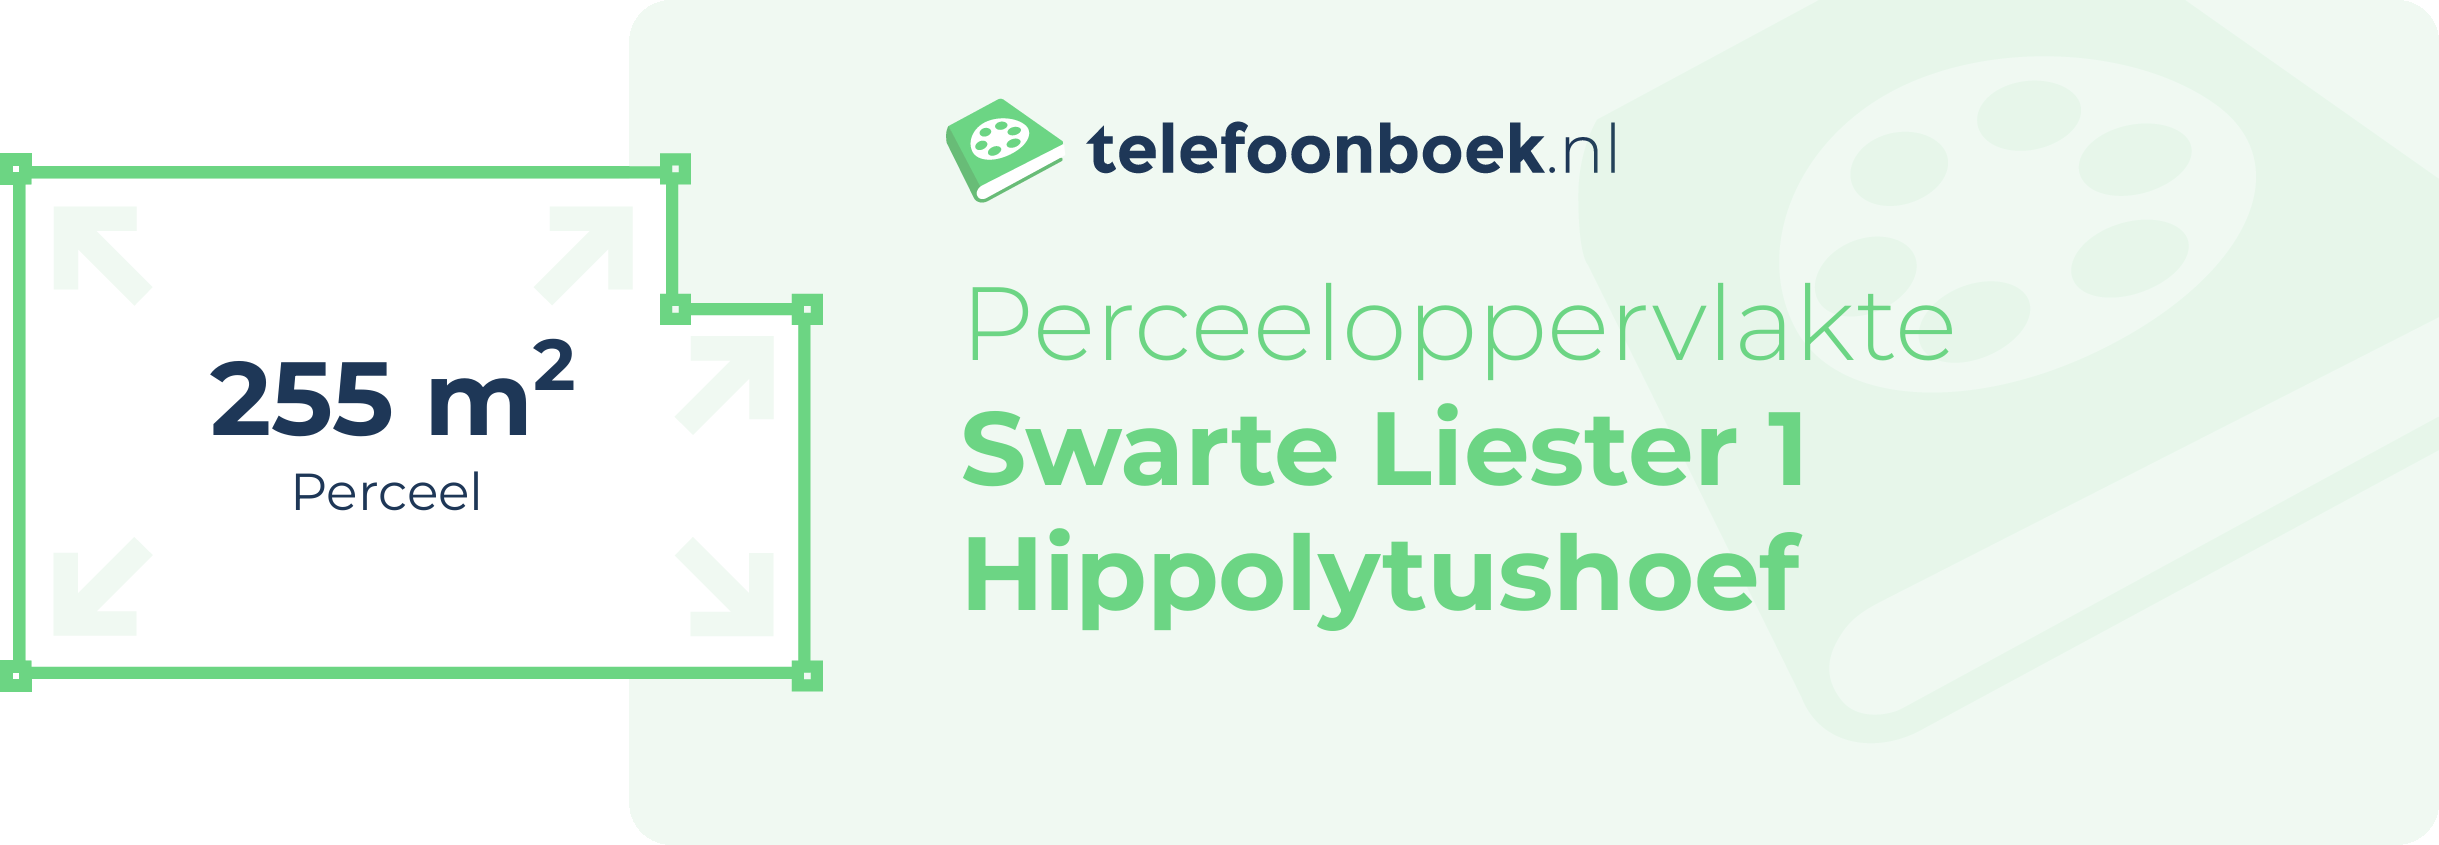 Perceeloppervlakte Swarte Liester 1 Hippolytushoef